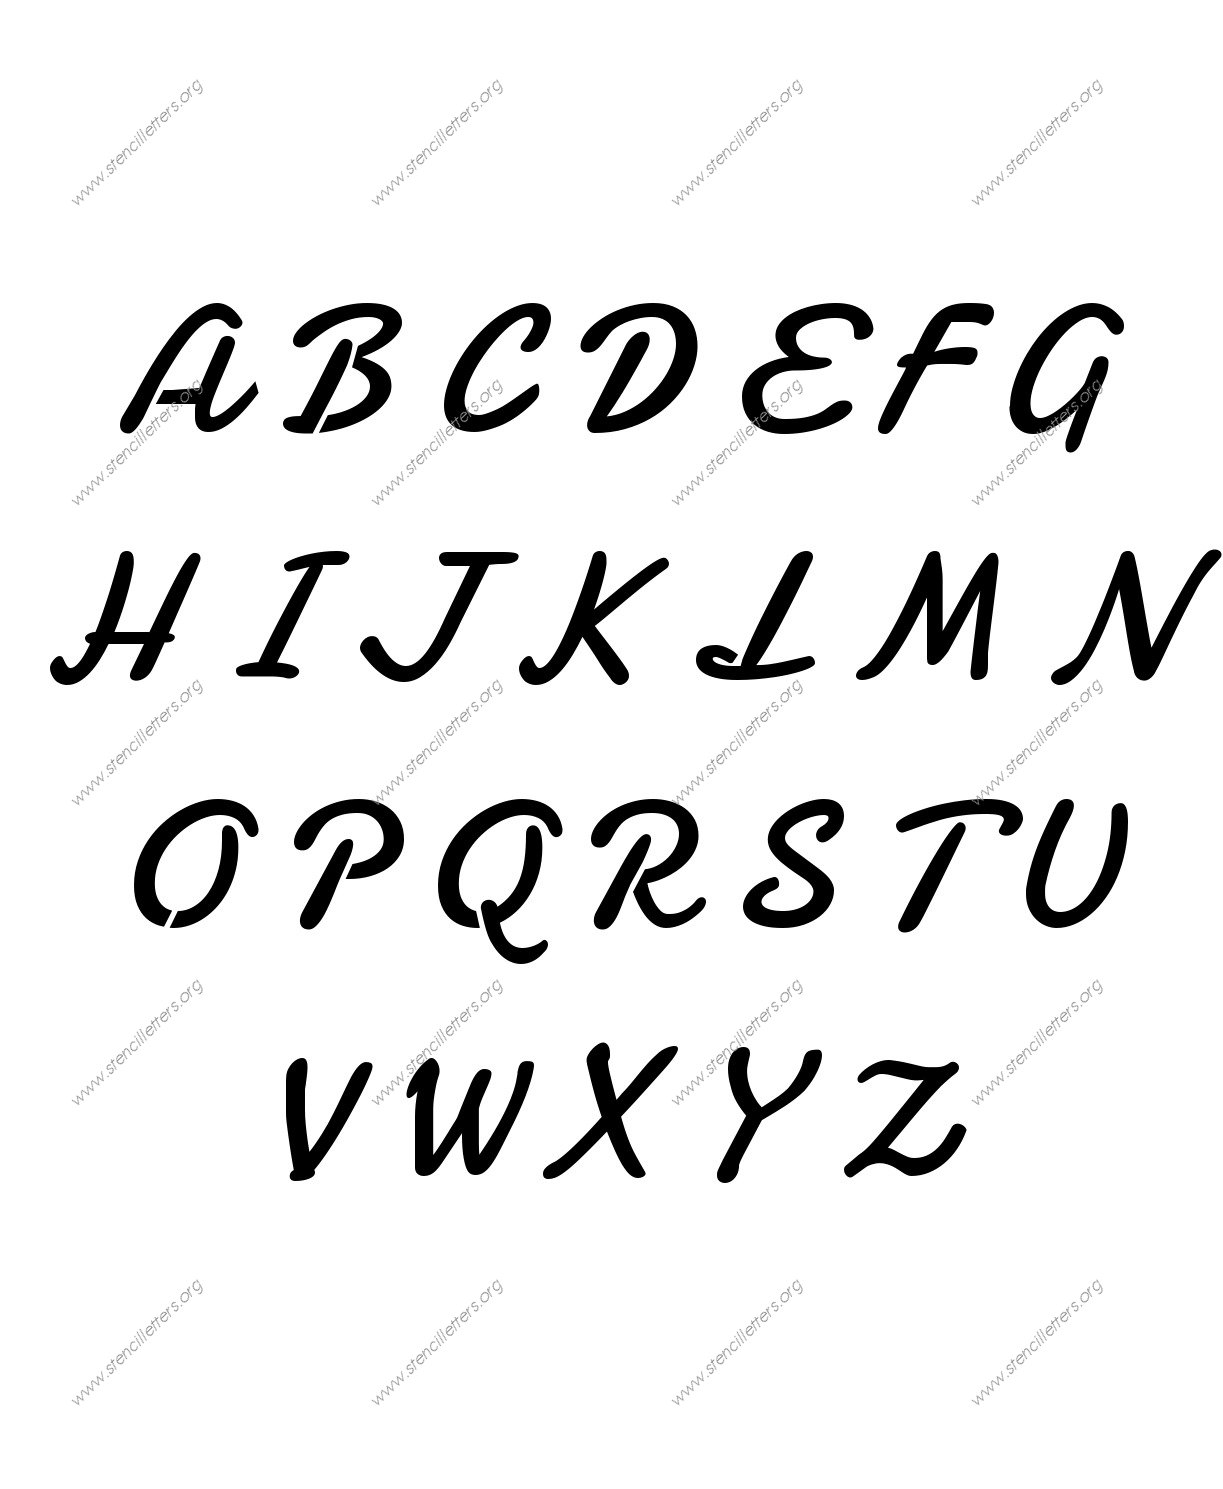 Display Script Cursive A to Z alphabet stencils